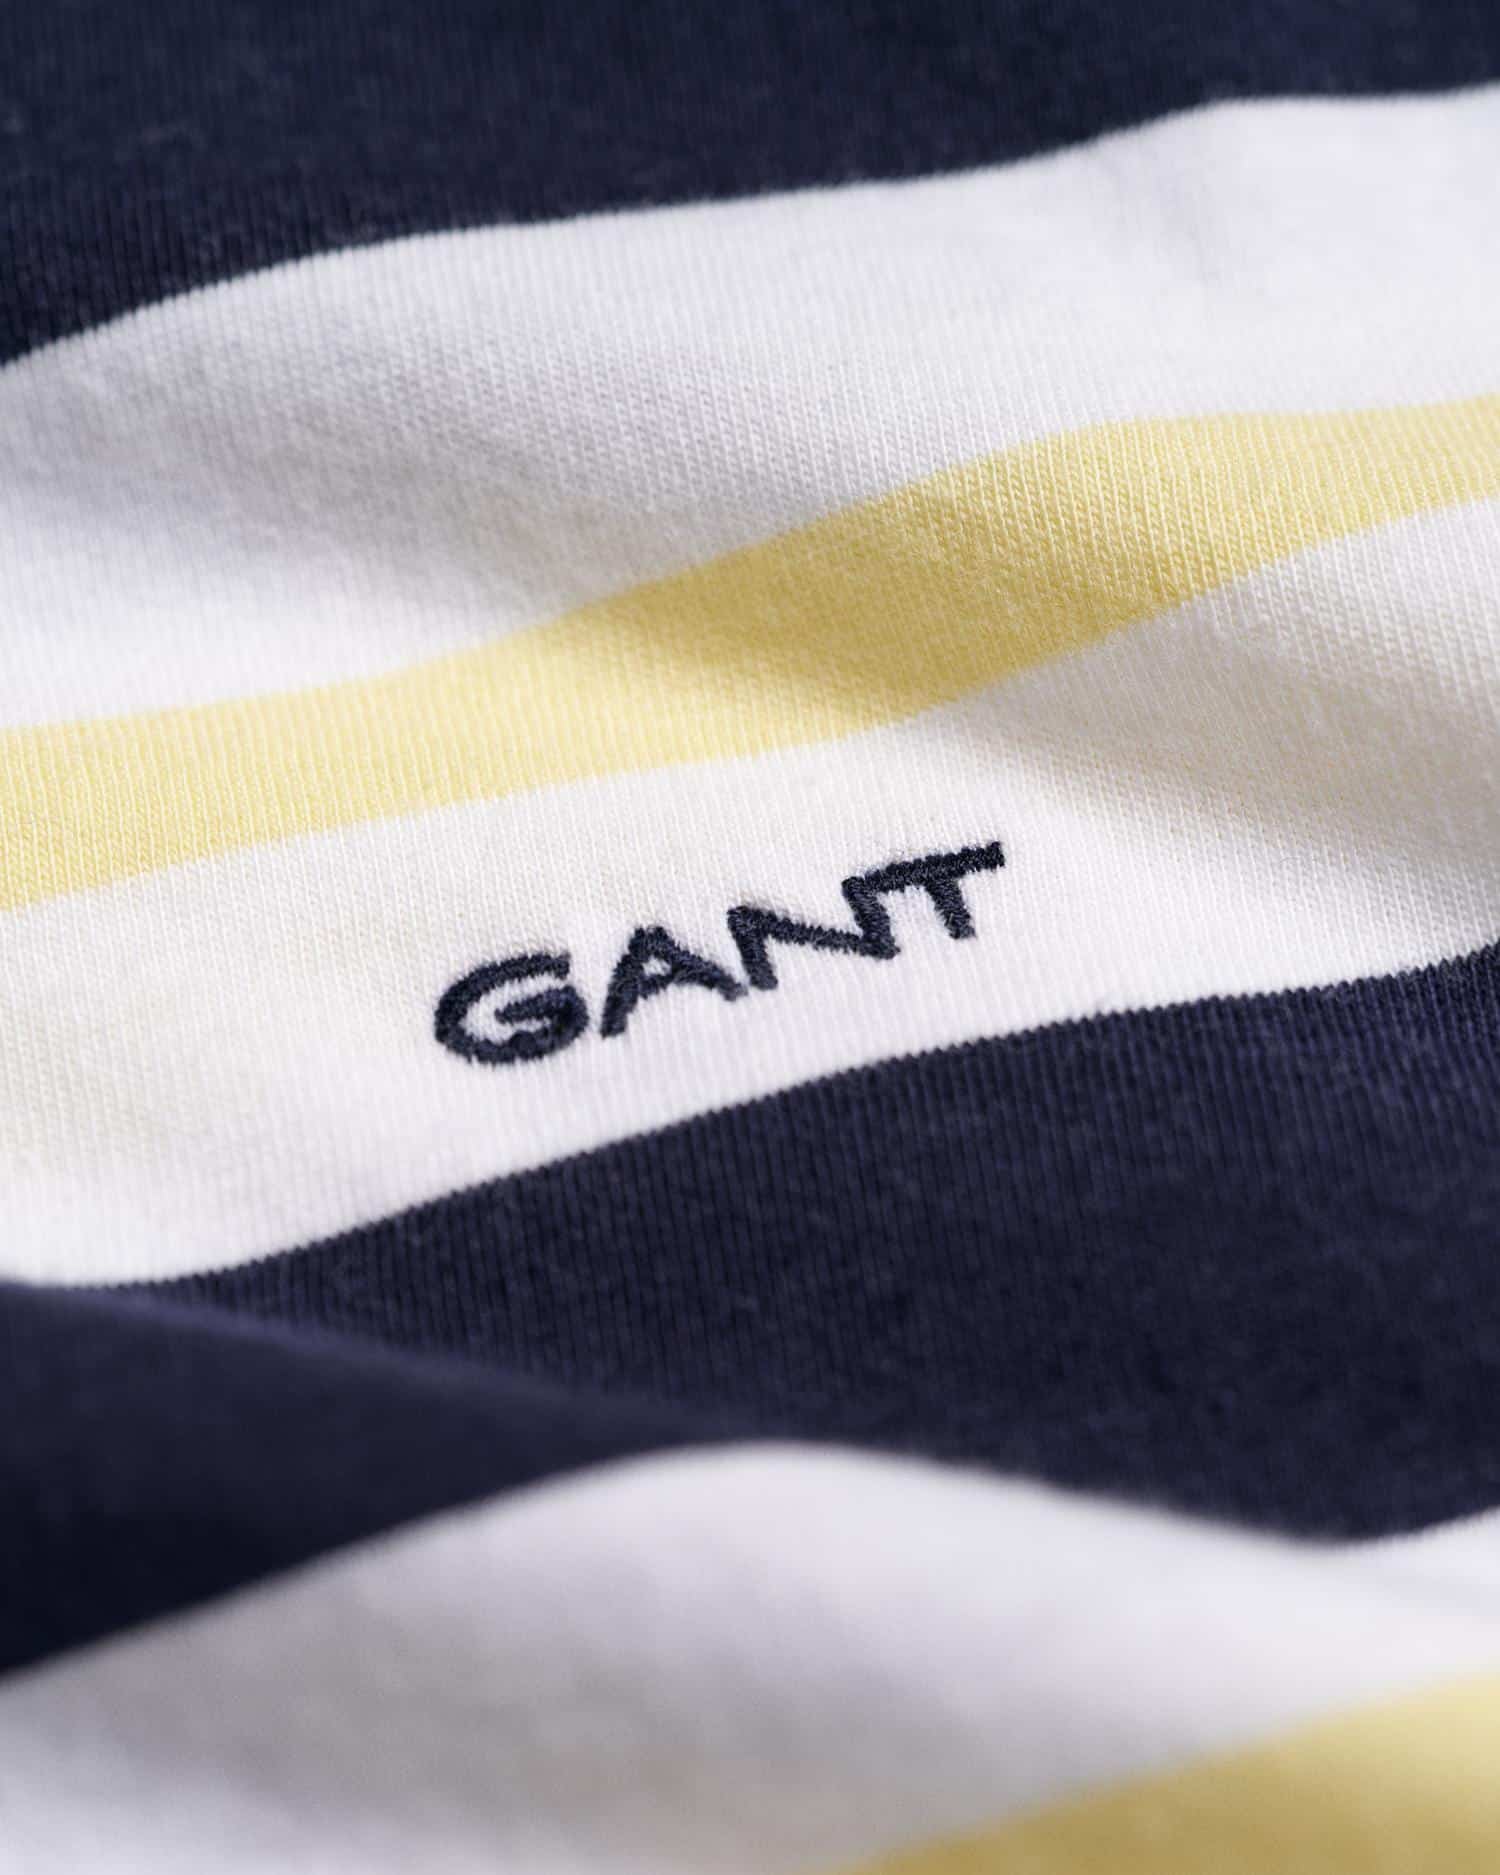 Gant navy and lemon striped boys tshirt close up